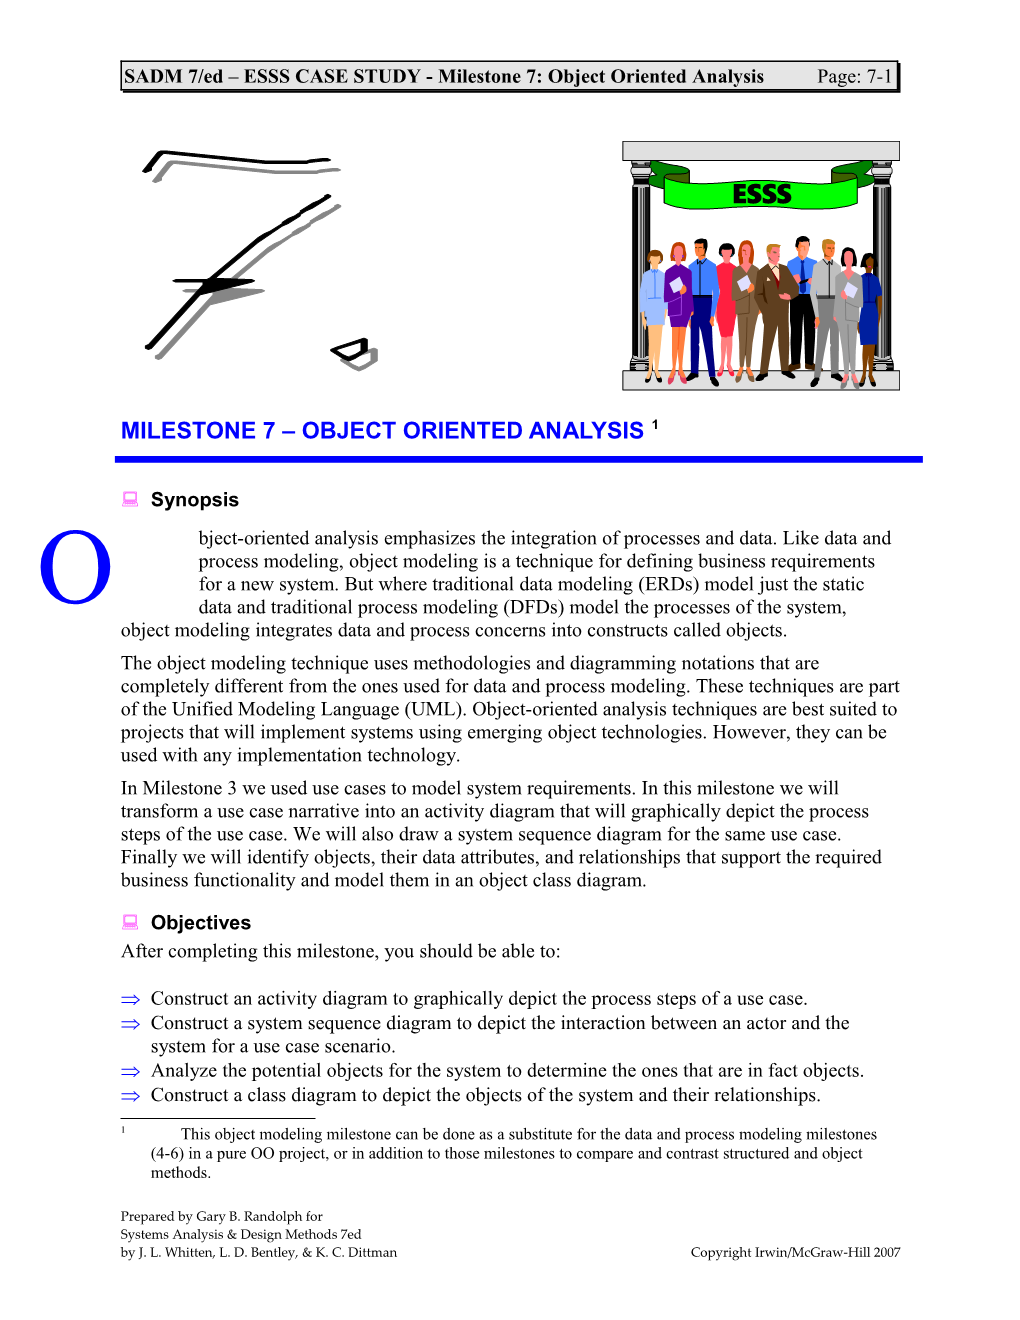 SADM 7/Ed ESSS CASE STUDY - Milestone 7: Object Oriented Analysis Page: 7-1